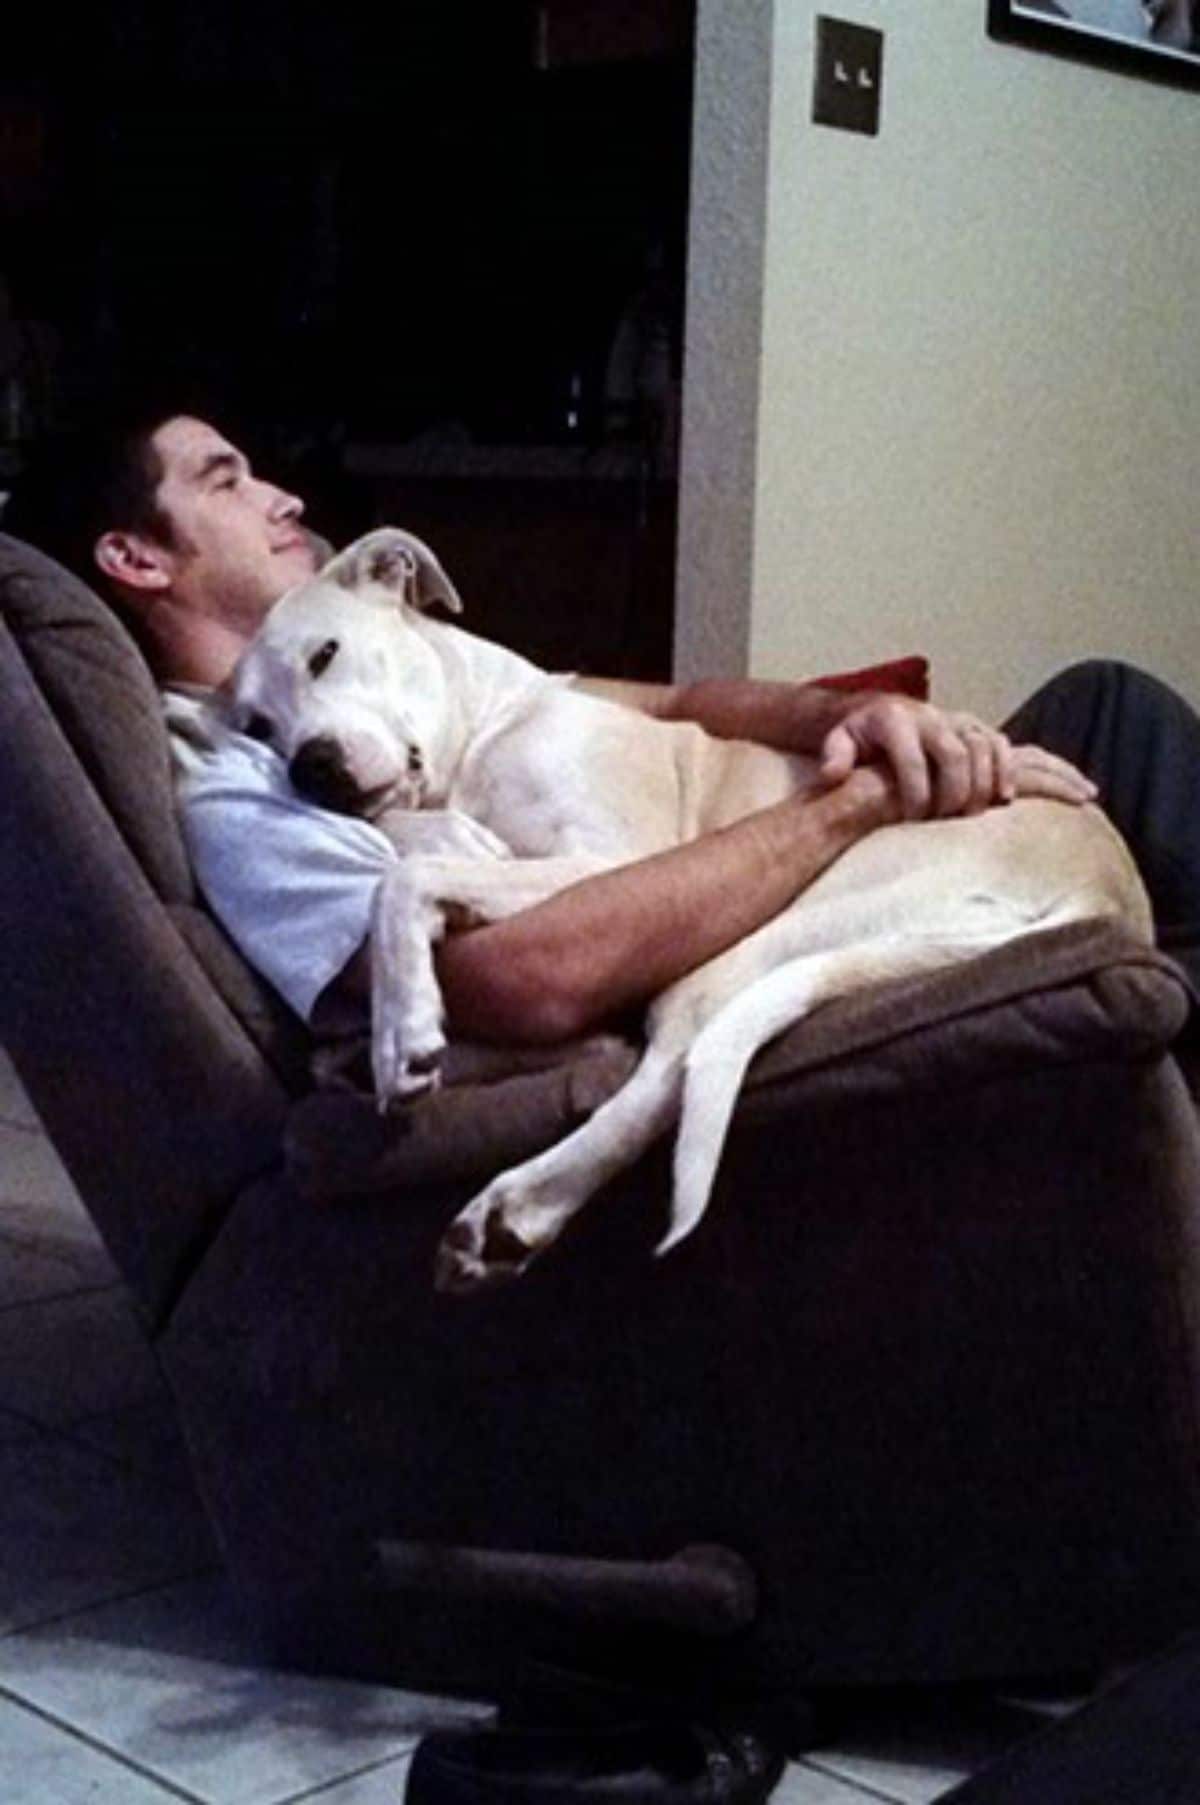 large white dog sleeping on a man's lap